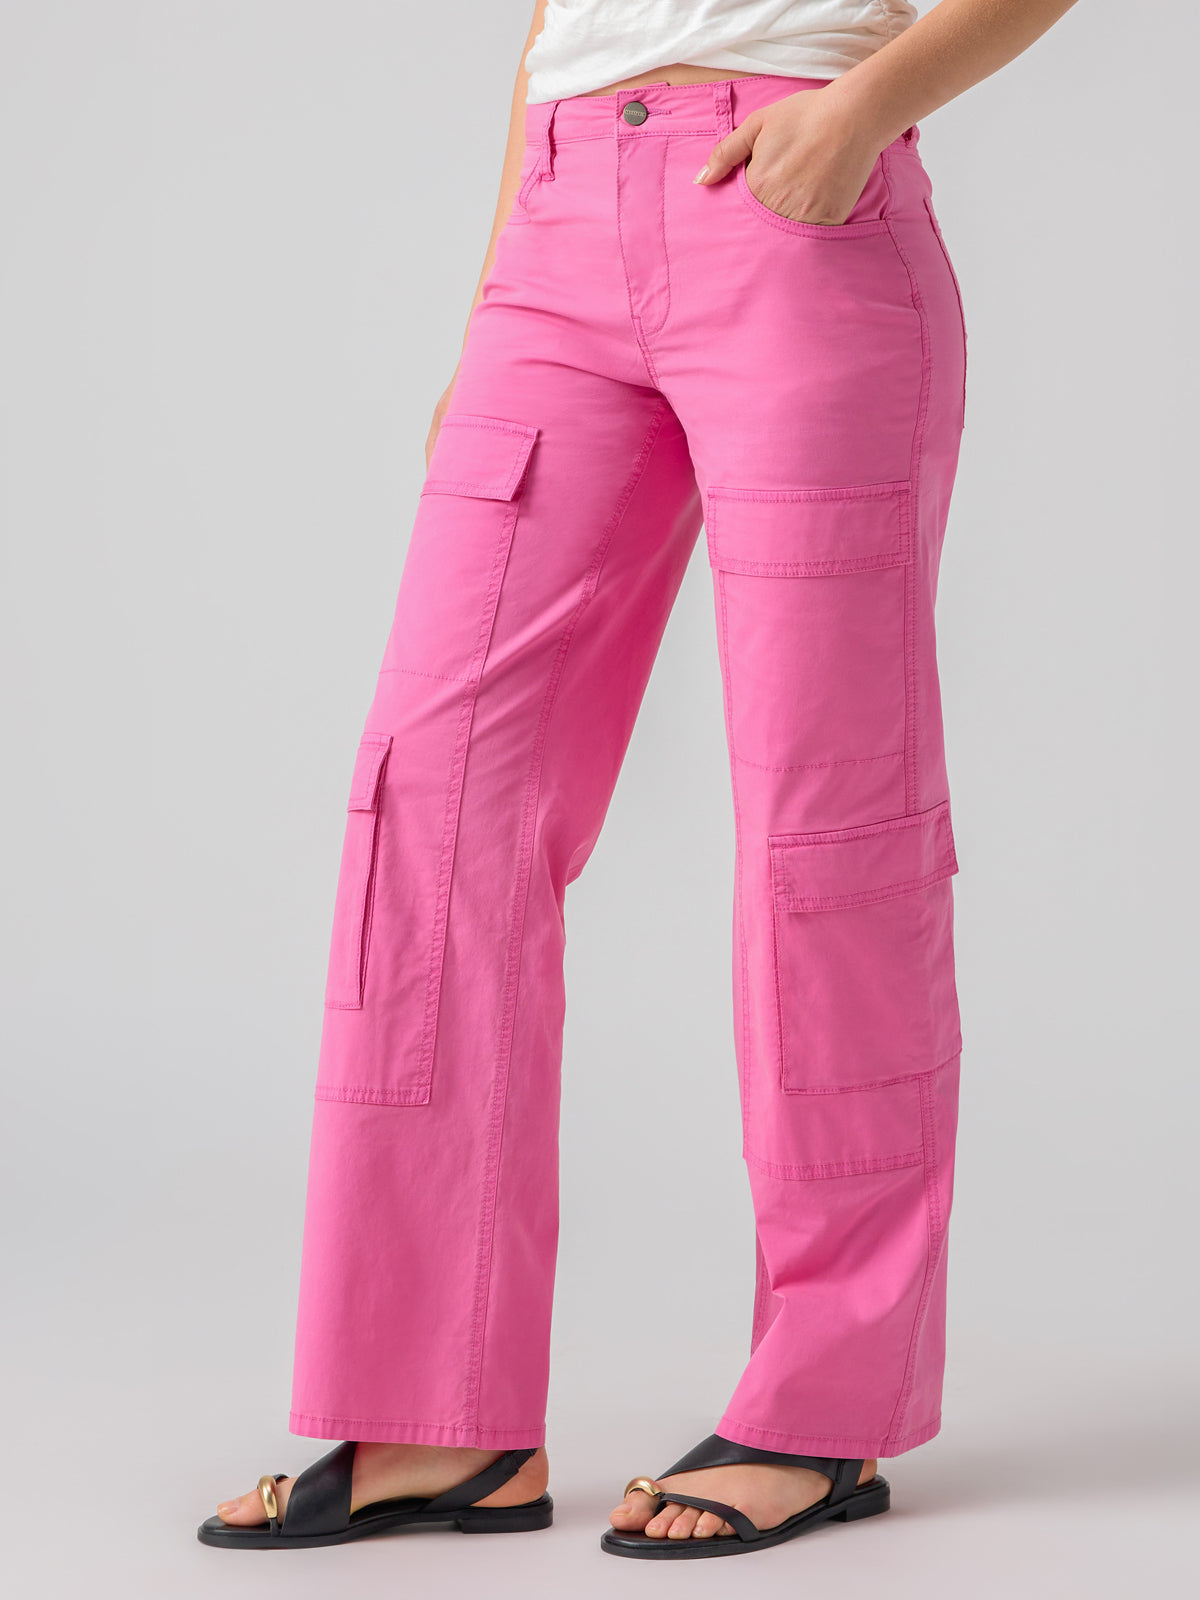 Y2K Express Cargo Pants 27 Capri Pink Vintage Pocket Zipper Cinched Low Rise